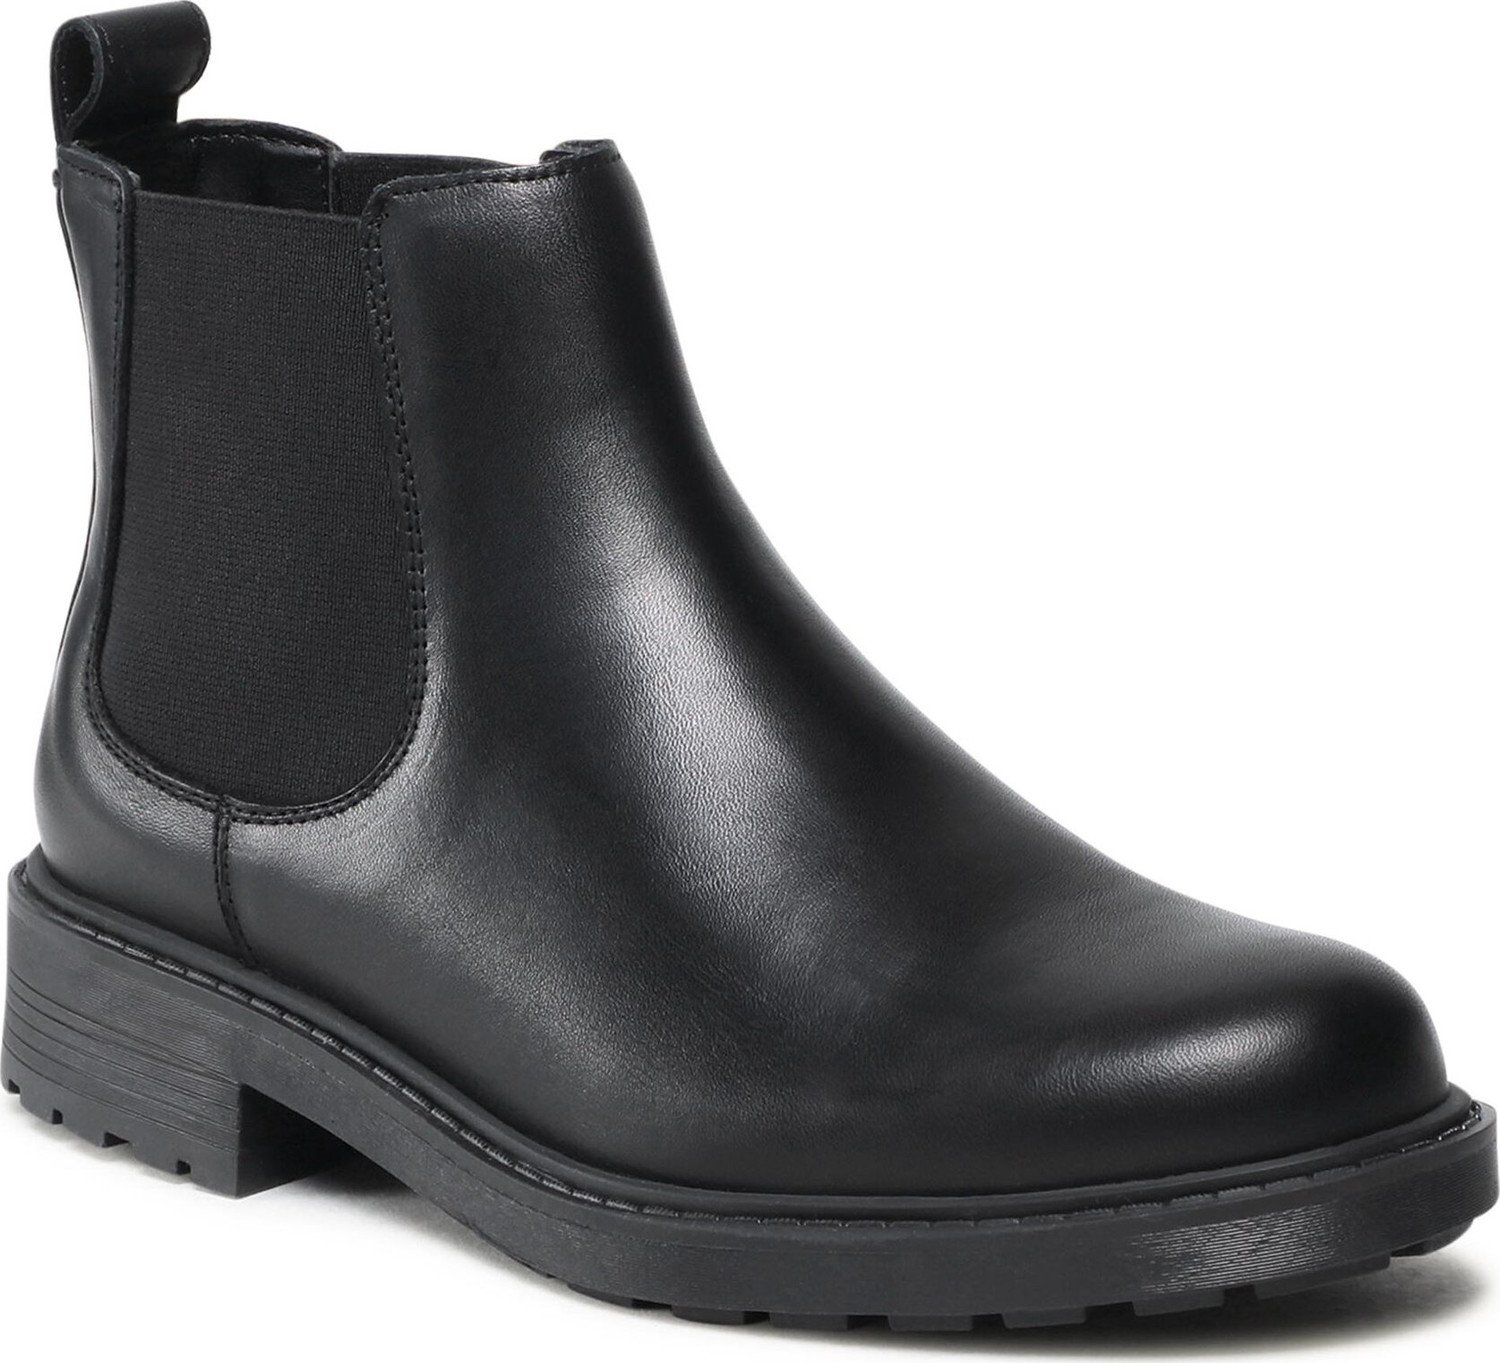 Kotníková obuv s elastickým prvkem Clarks Orinoco2 Lane 261636194 Black Leather